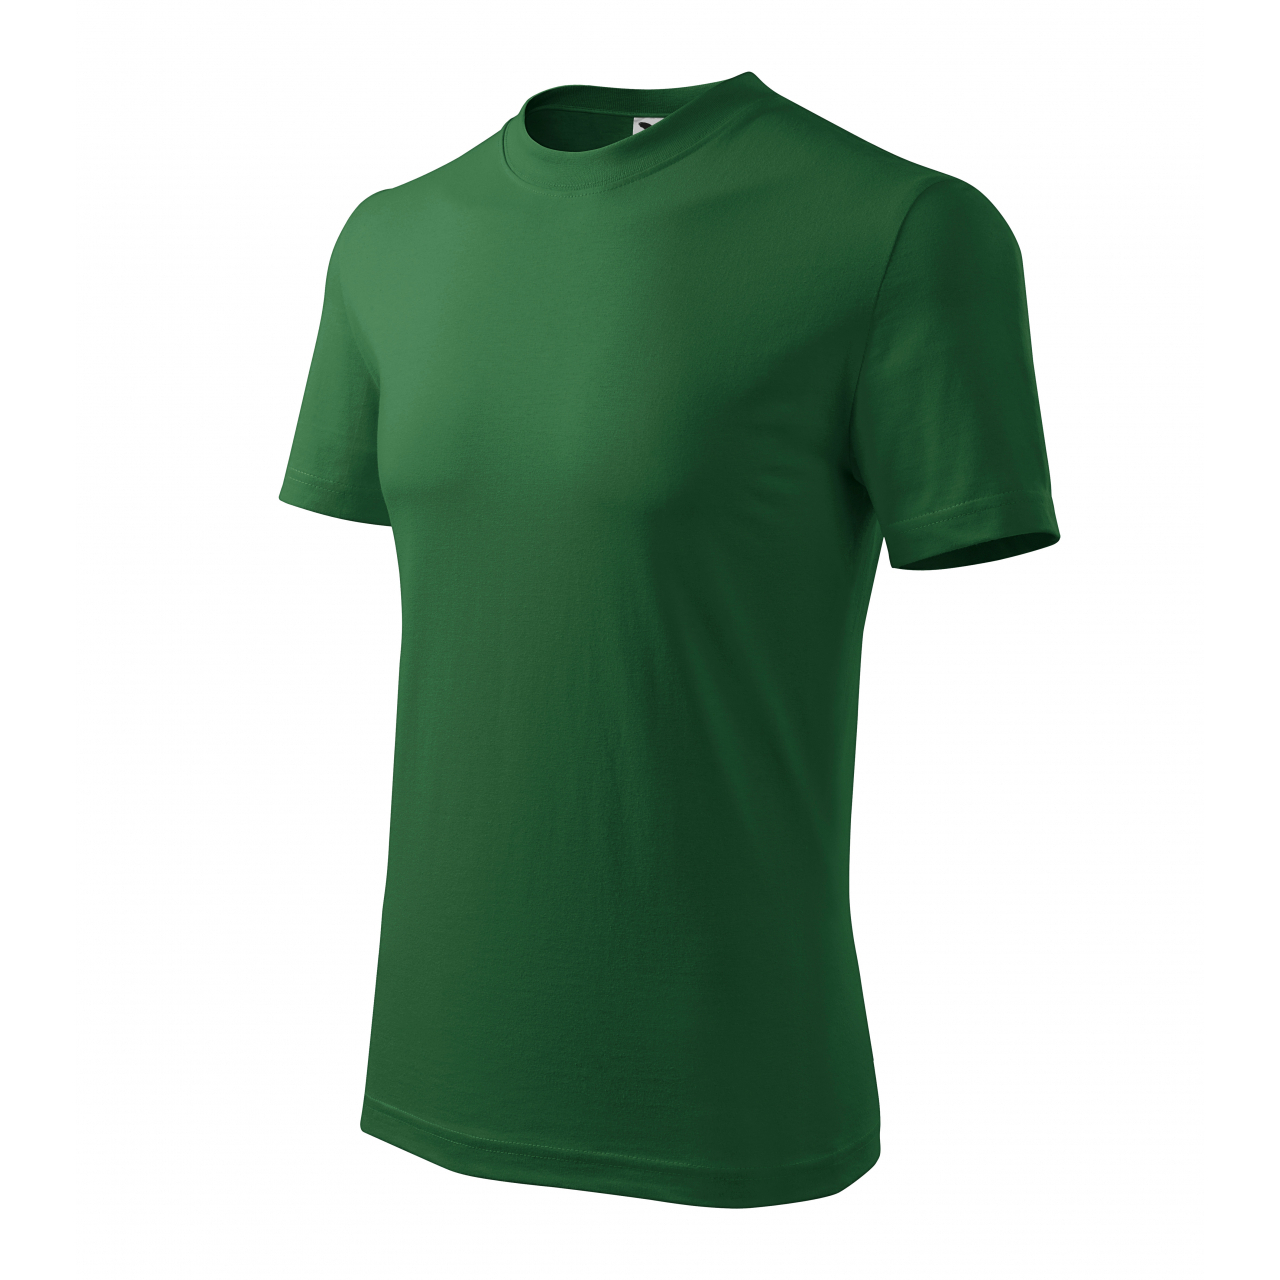 Tričko unisex Malfini Classic - tmavě zelené, XL